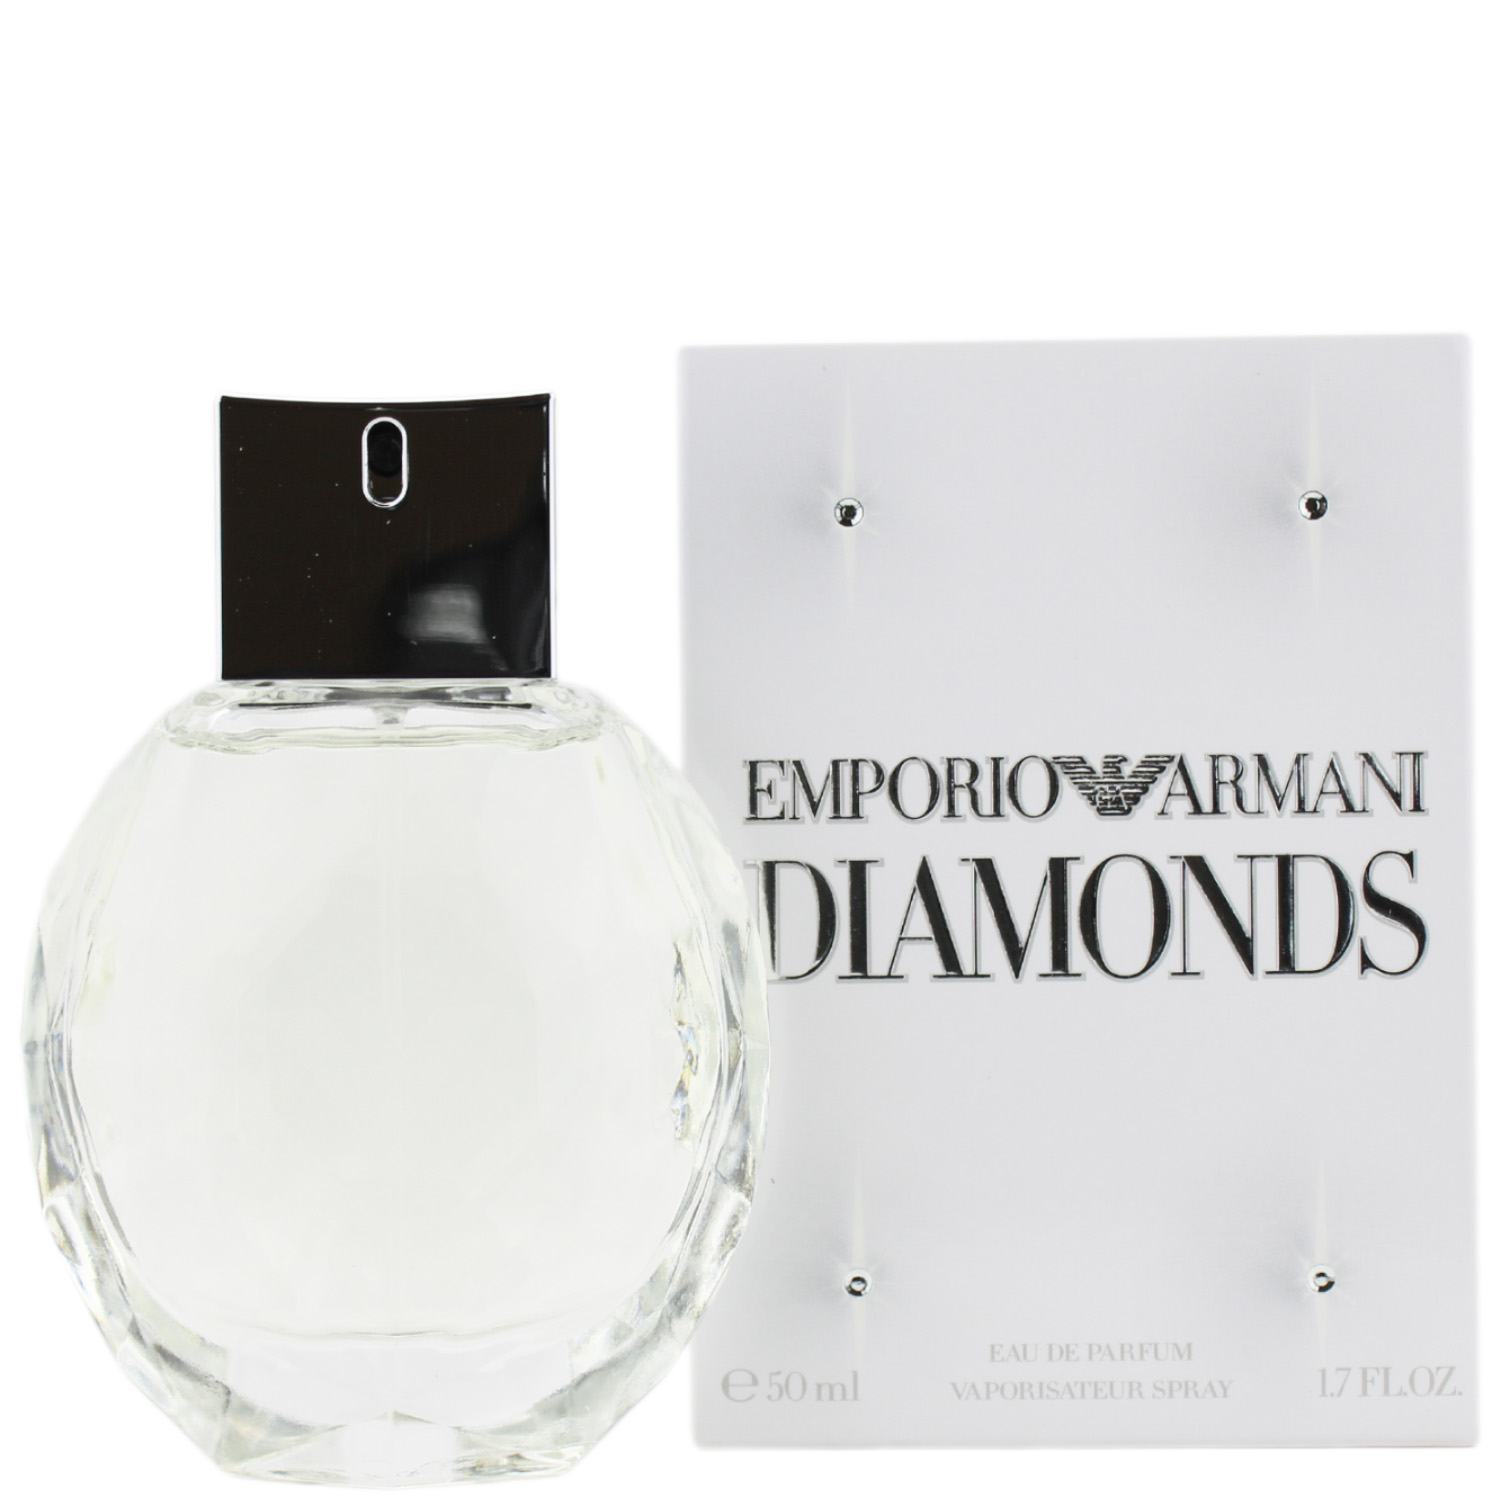 Emporio Armani Diamonds Eau de Parfum 50ml